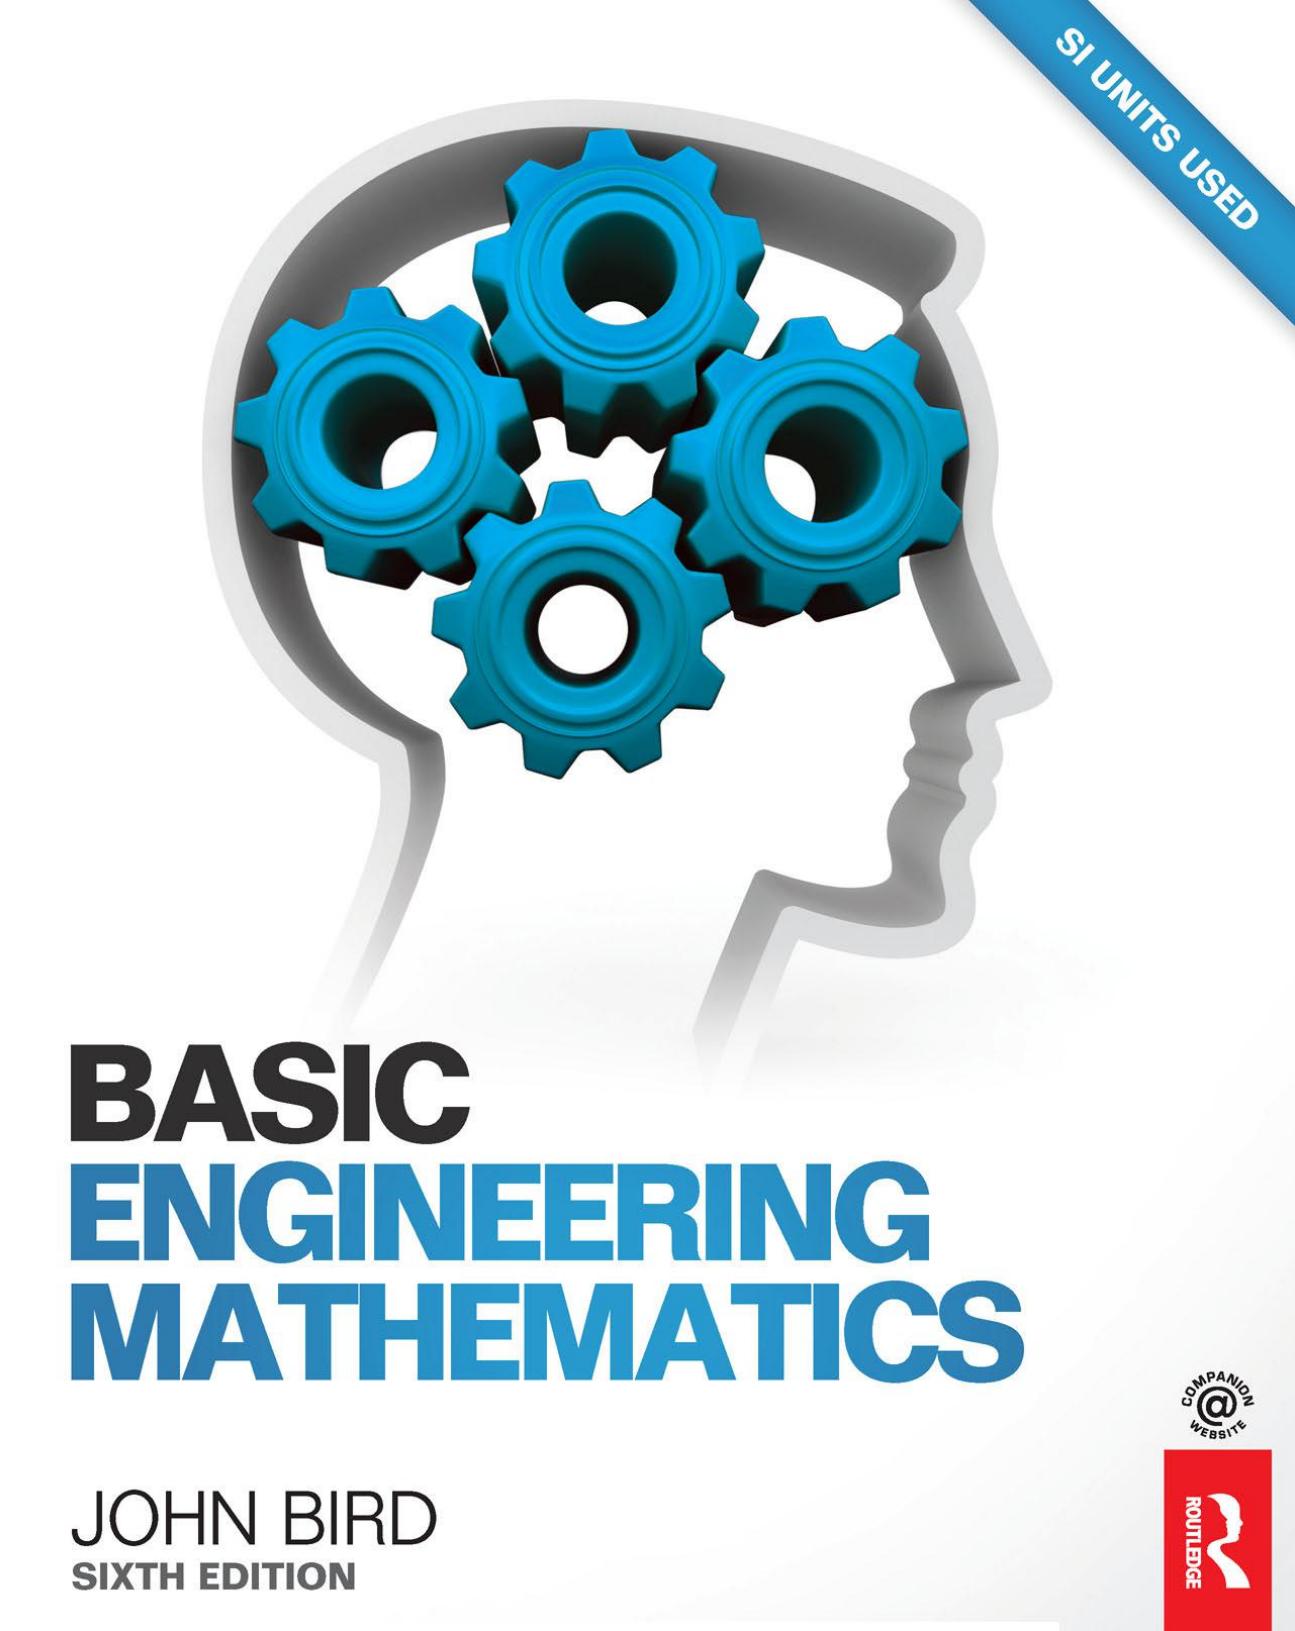 Basic Engineering Mathematics 6th Edition                                                                           2014